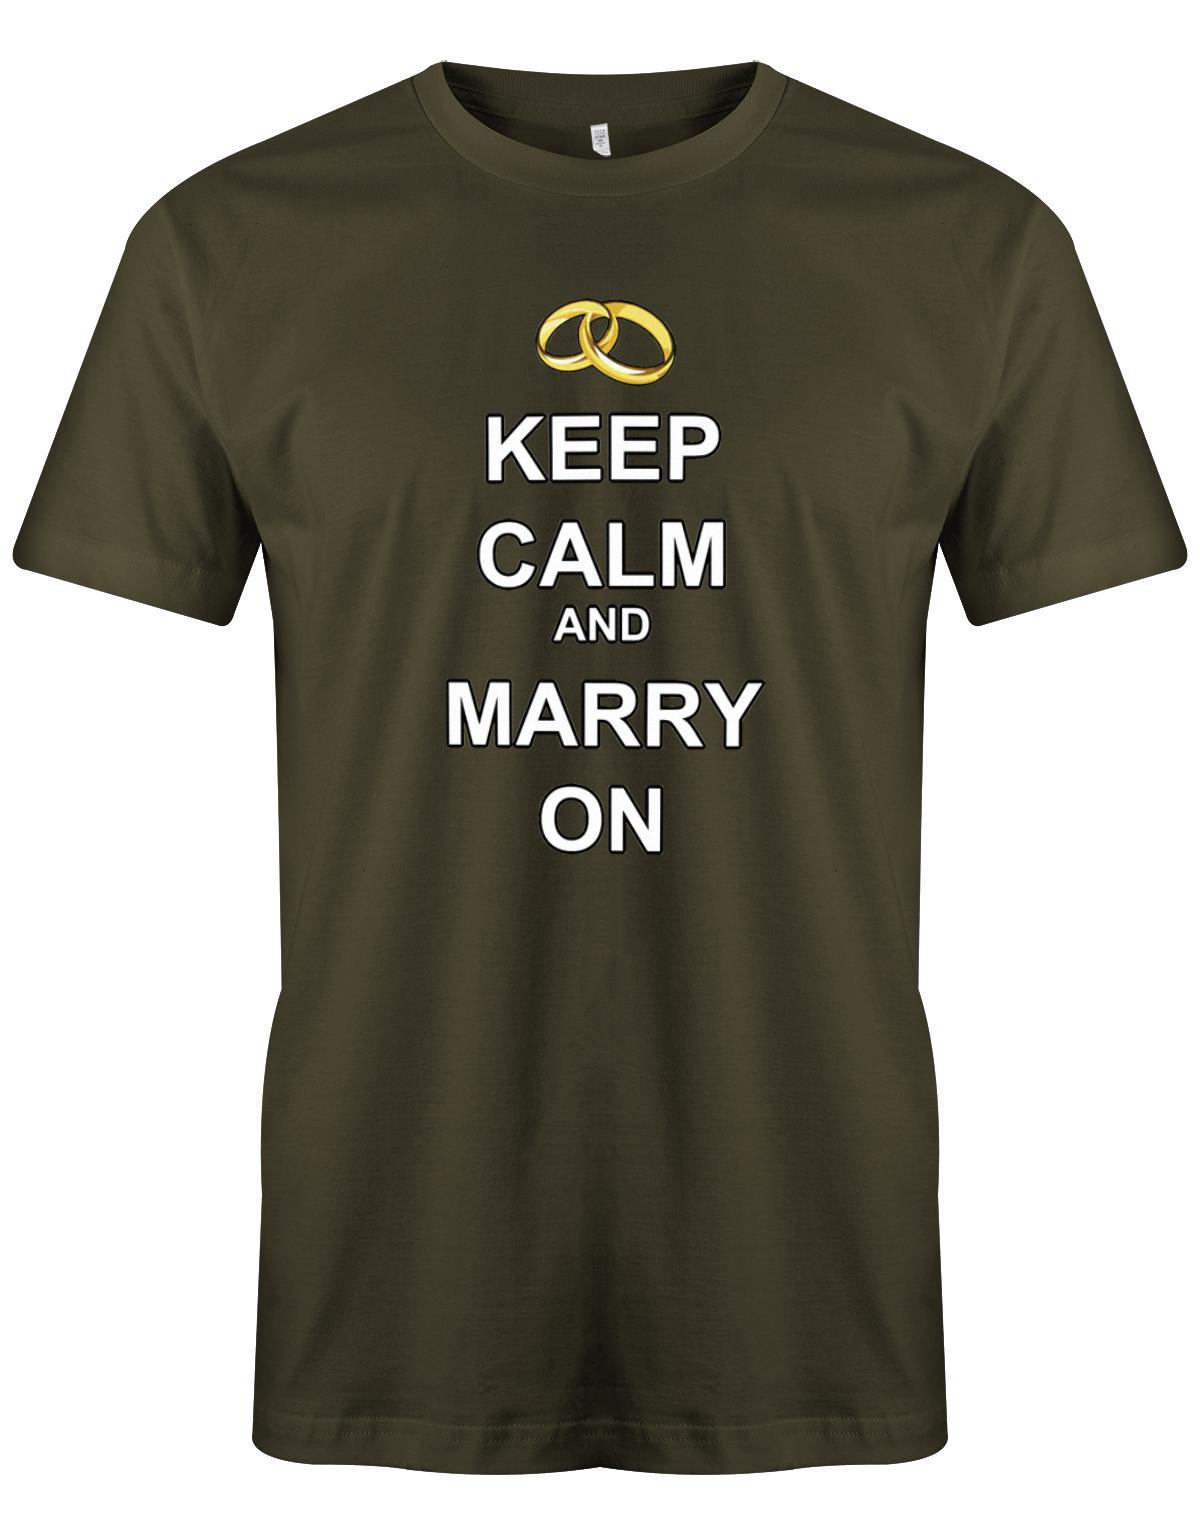 Keep-Calm-and-marry-on-Herren-JGA-Shirt-Army